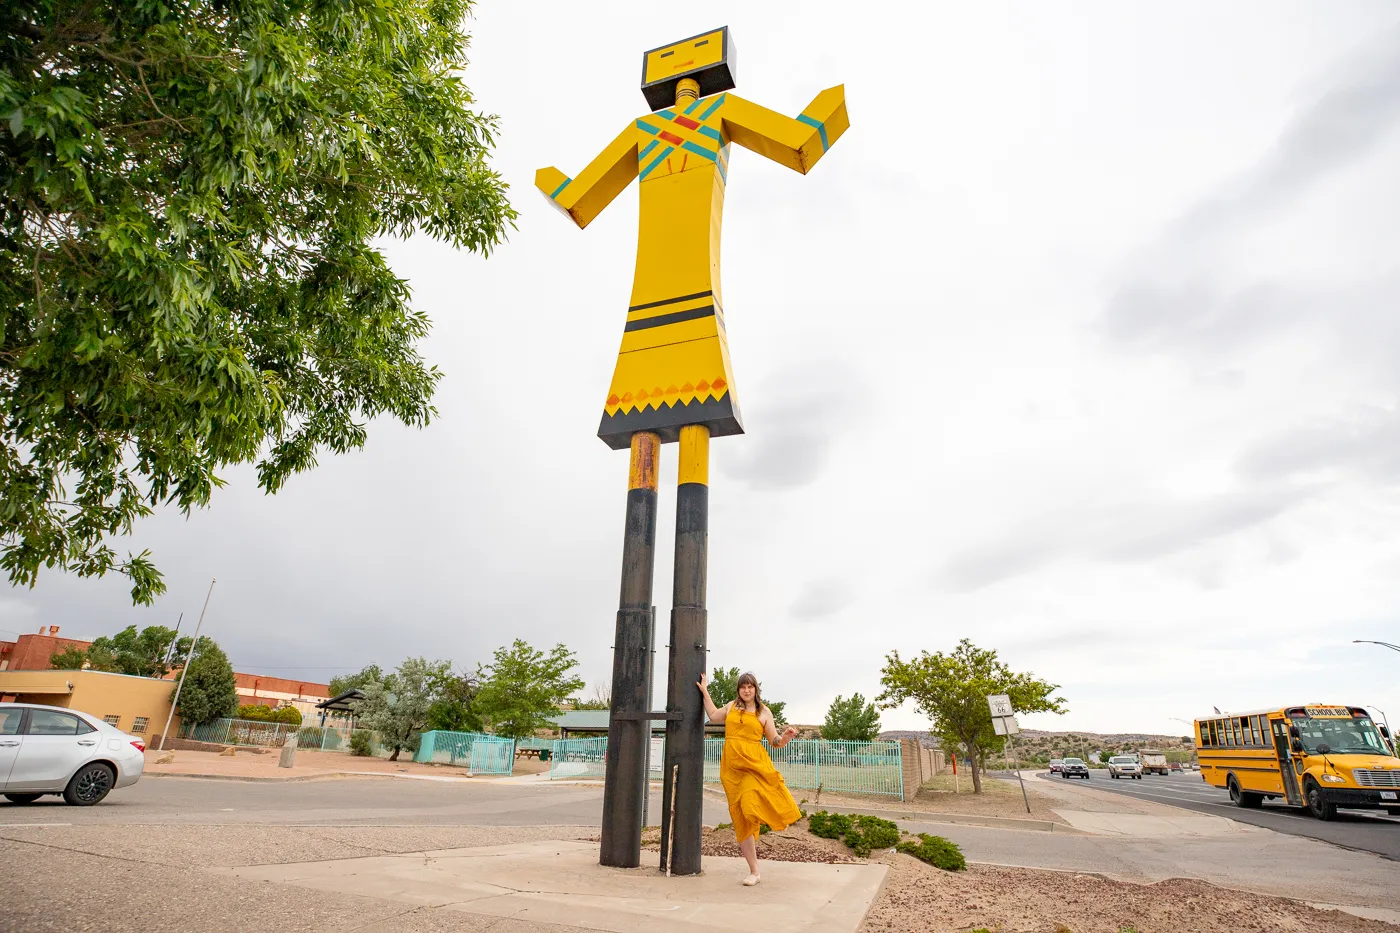 Big Kachina Statue in Gallup, New Mexico Route 66 Roadside Attraction